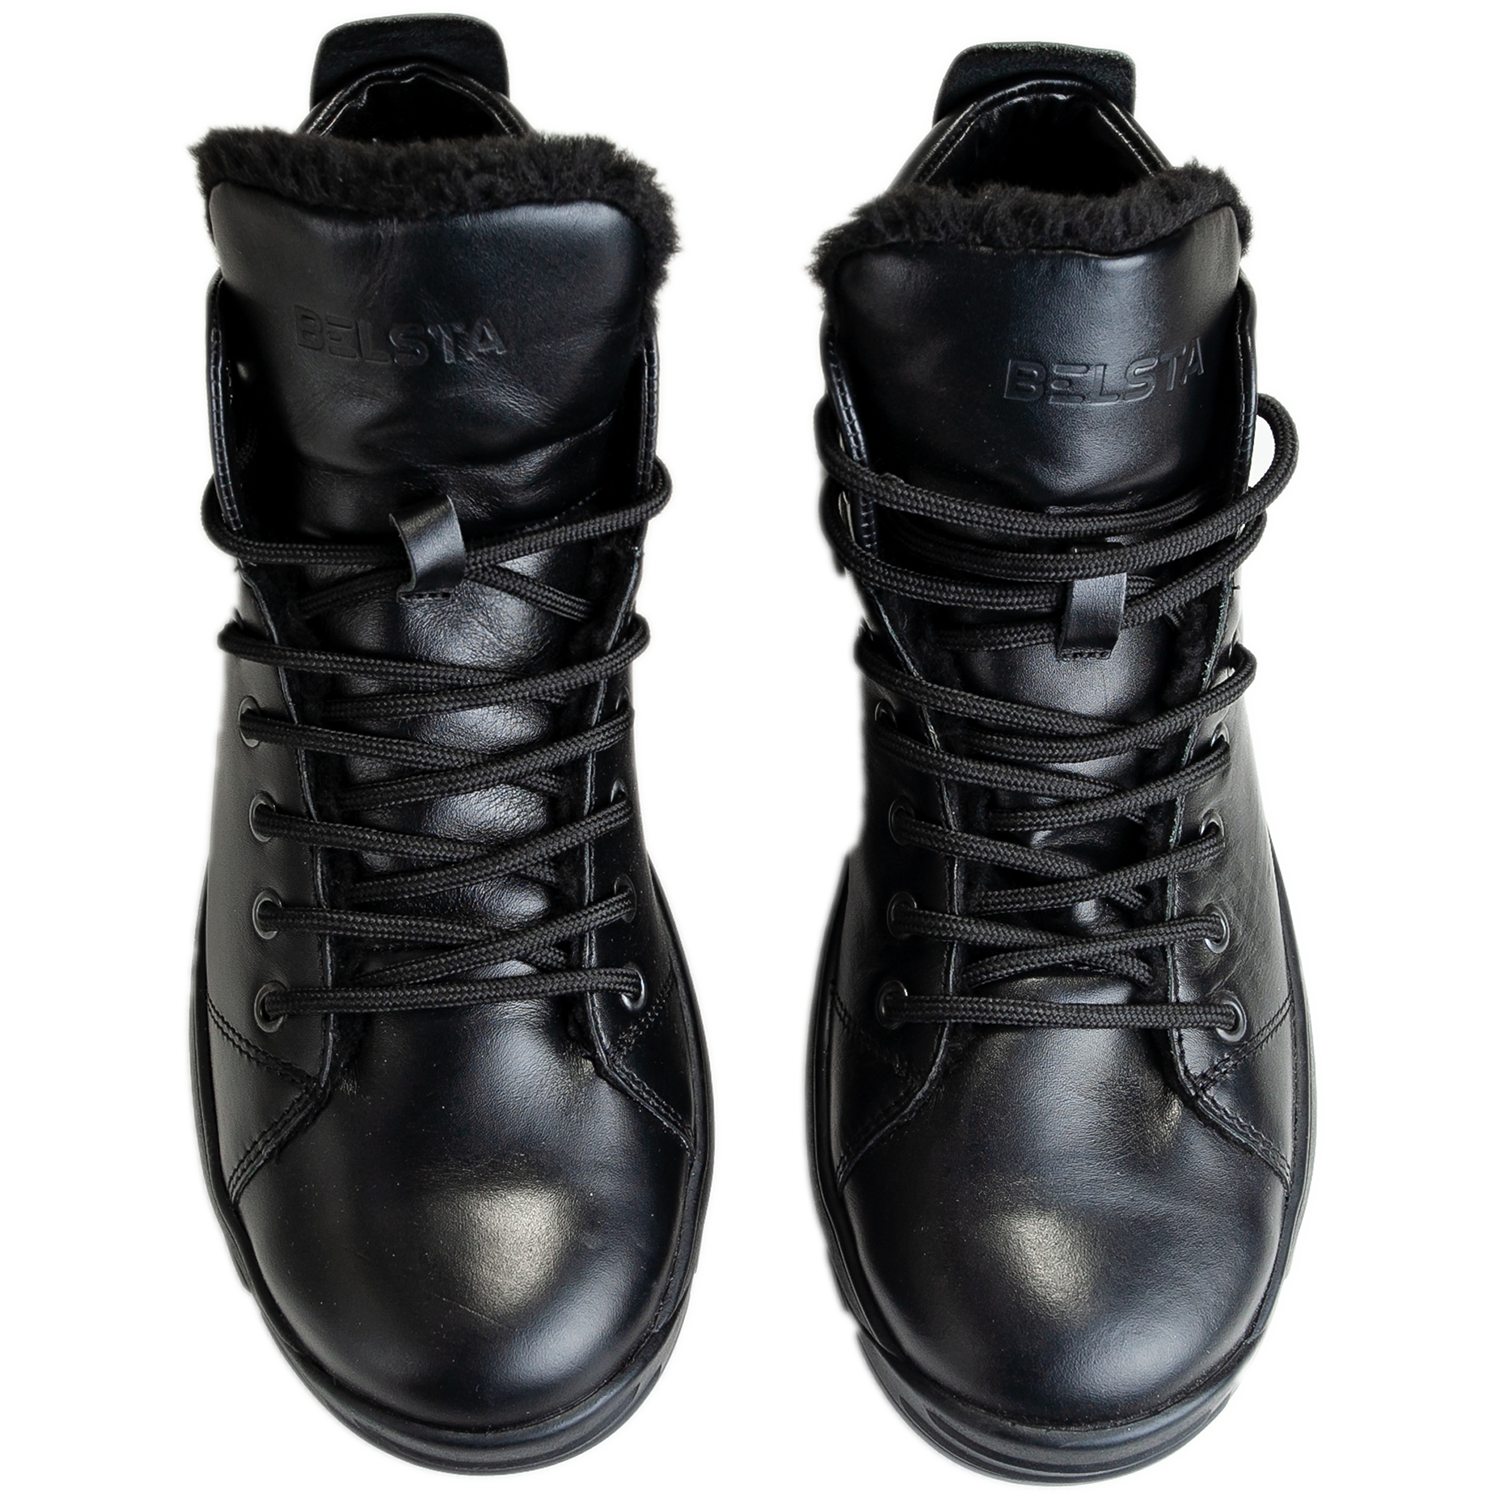 Men's leather BELSTA boots - 3